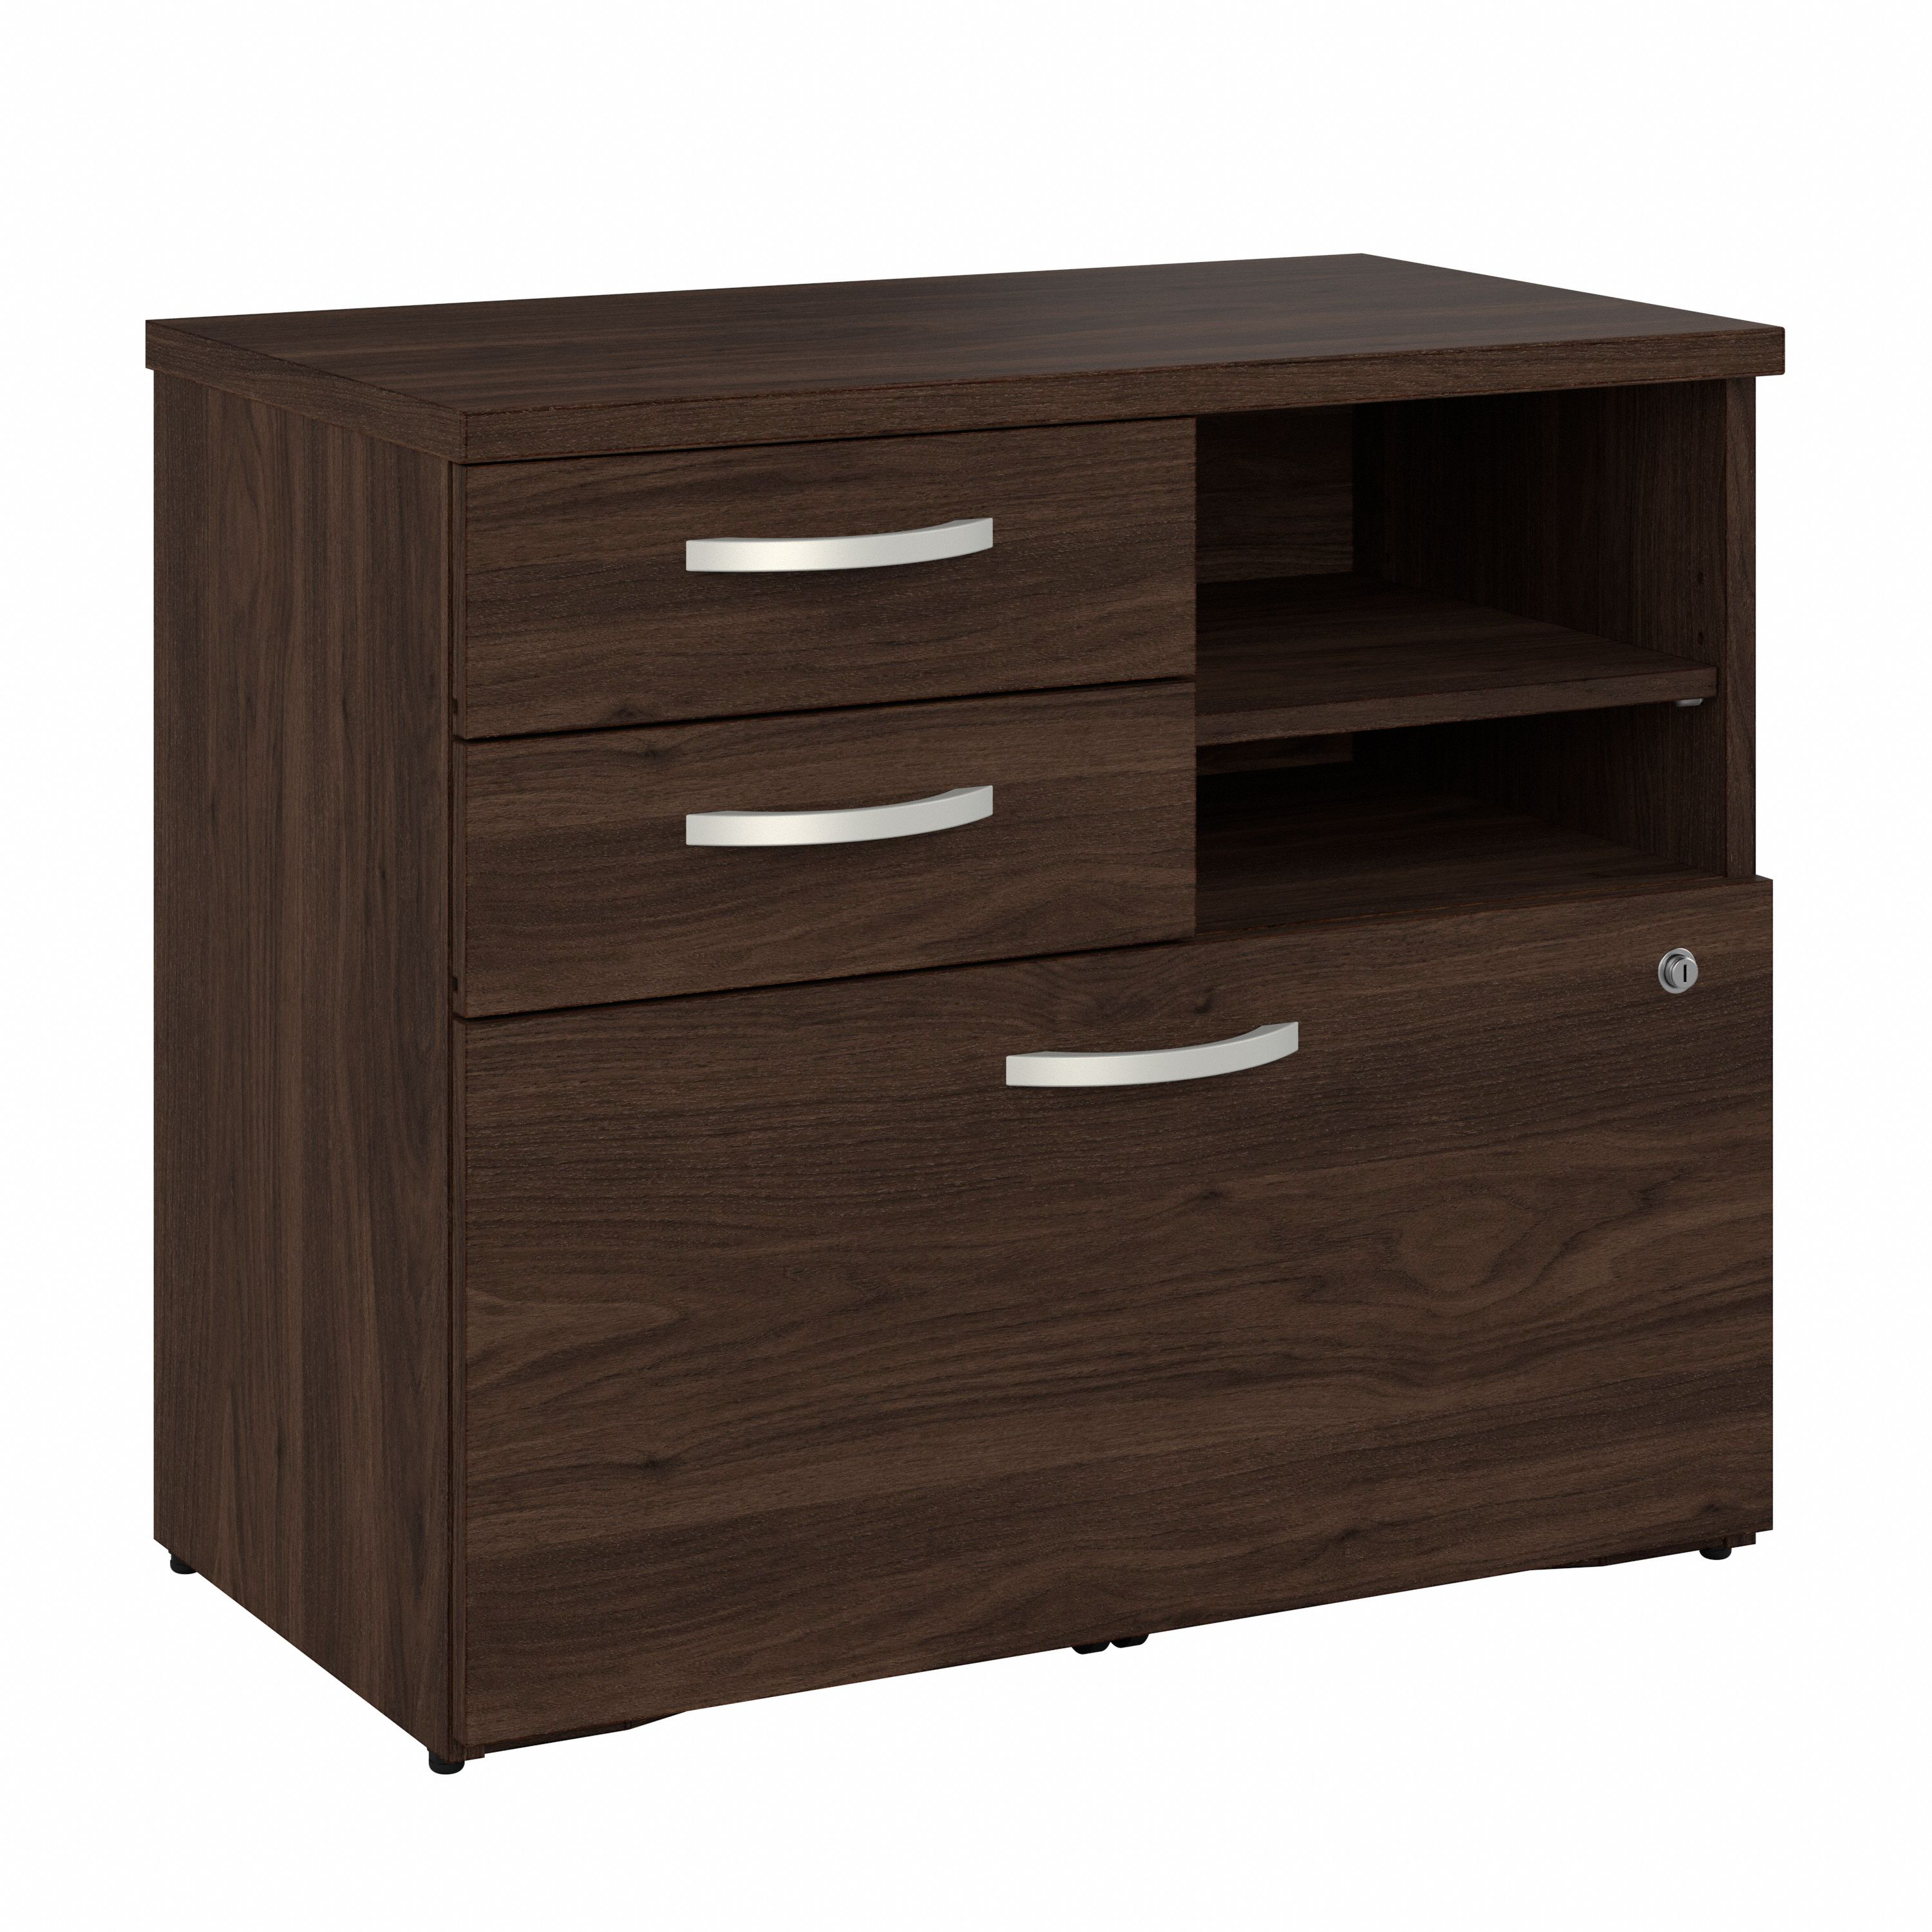 Shop Bush Business Furniture Studio C Office Storage Cabinet with Drawers and Shelves 02 SCF130BWSU #color_black walnut